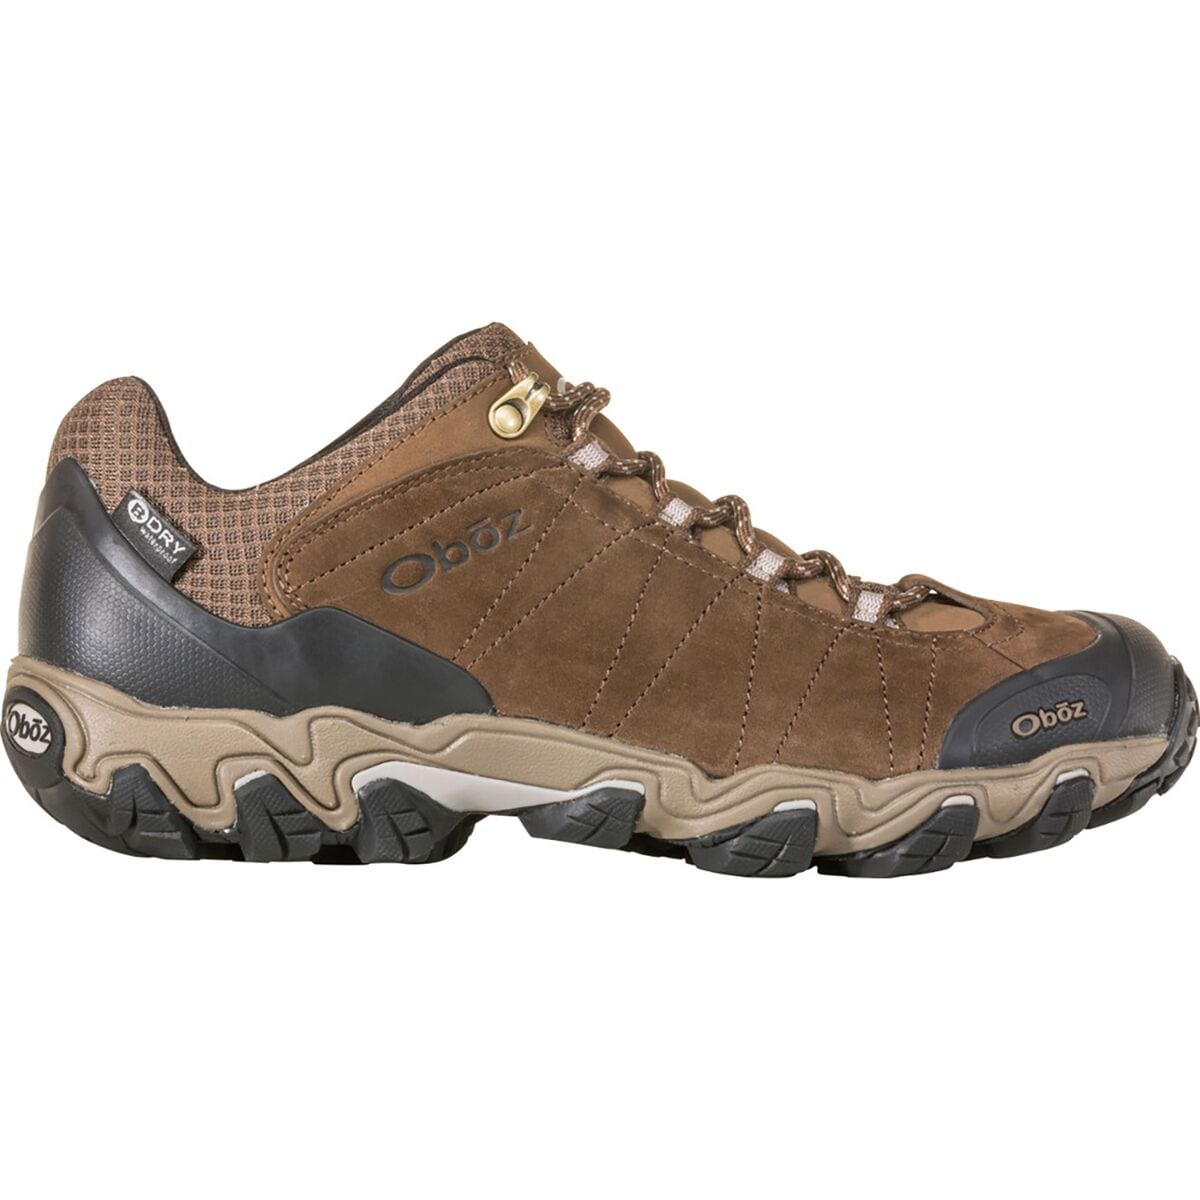 Oboz Bridger Low B-Dry Wide Hiking Shoe - Men's